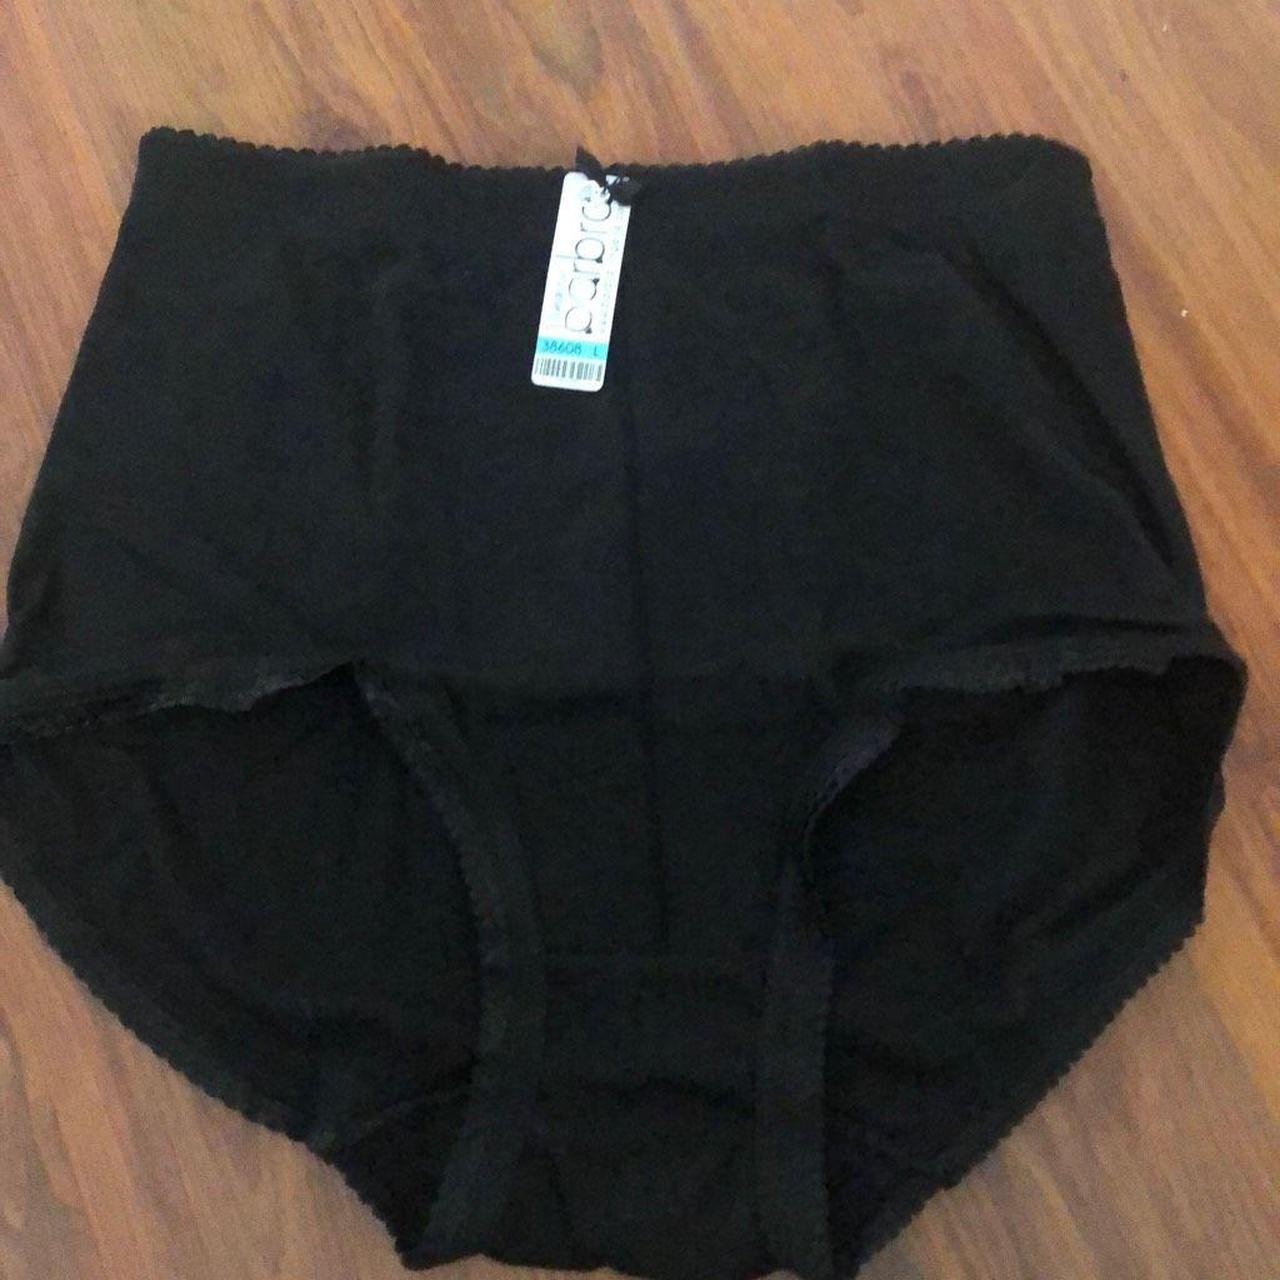 VTG 1992 JOCKEY for Her WOMENS brief underwear panties Size 5 Black NOS  $16.99 - PicClick